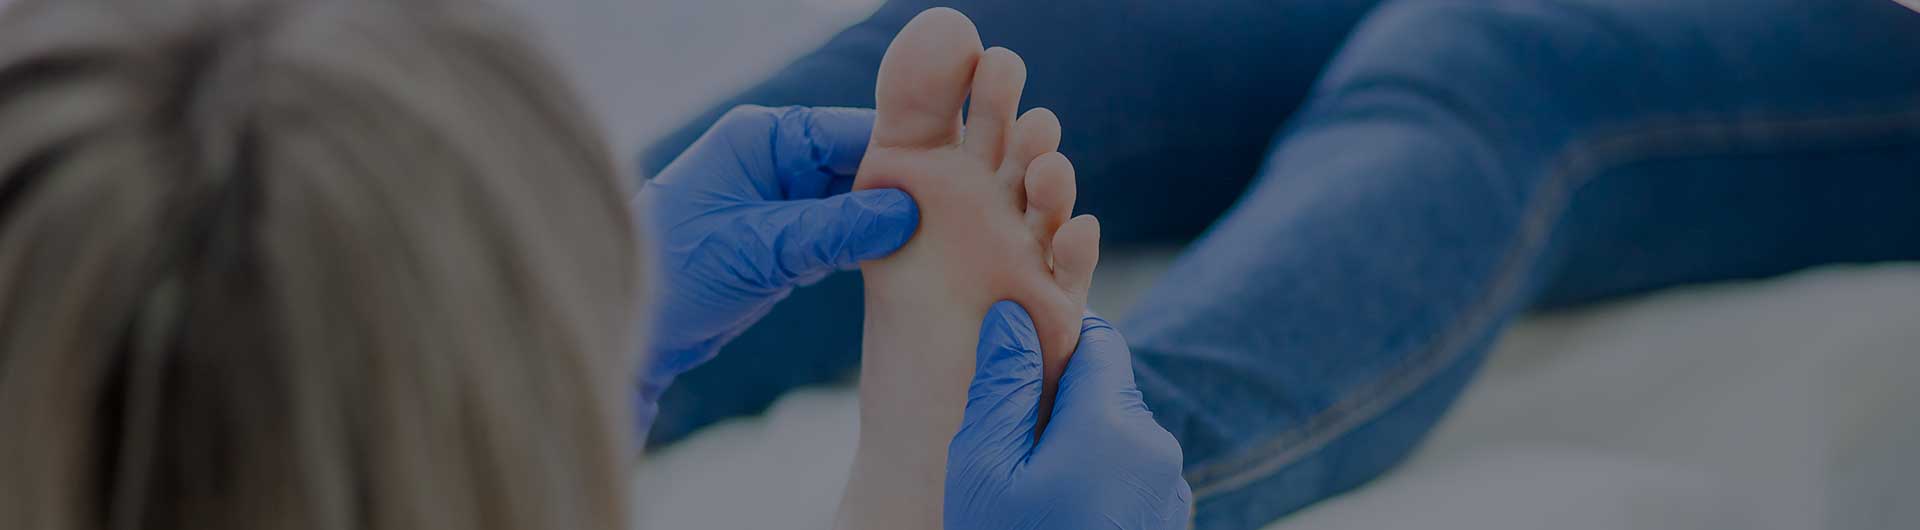 Podiatrist treats foot.